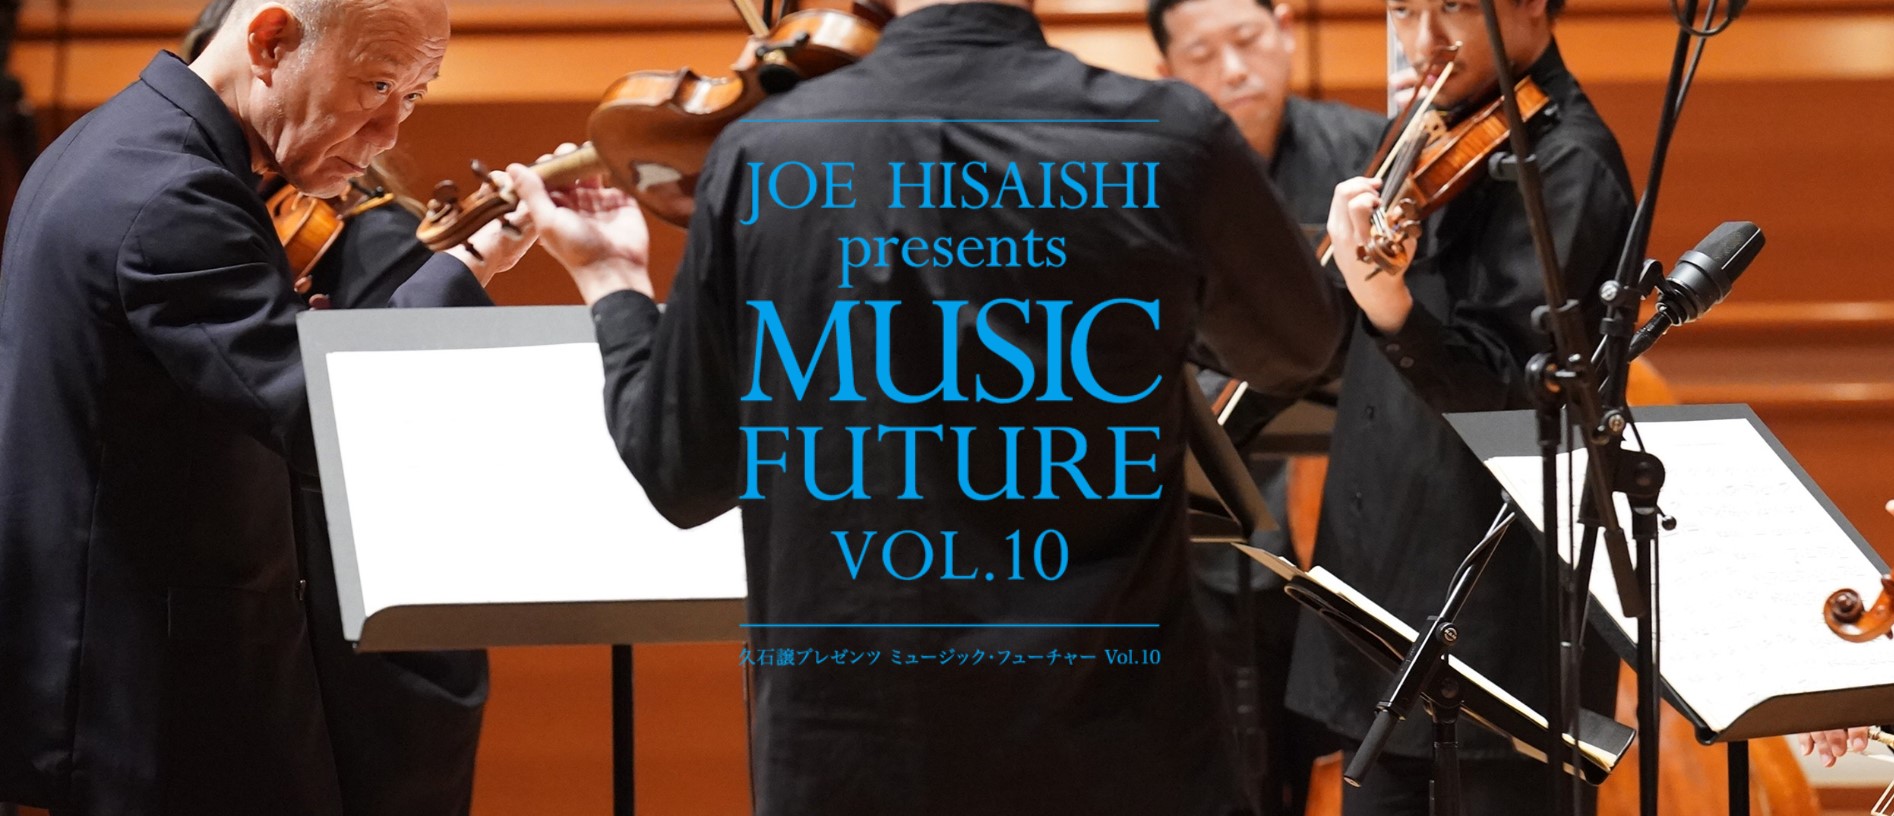 Info. 2023/10/31,11/01 「久石譲 presents MUSIC FUTURE Vol.10」コンサート開催決定!! – 久石譲ファンサイト  響きはじめの部屋